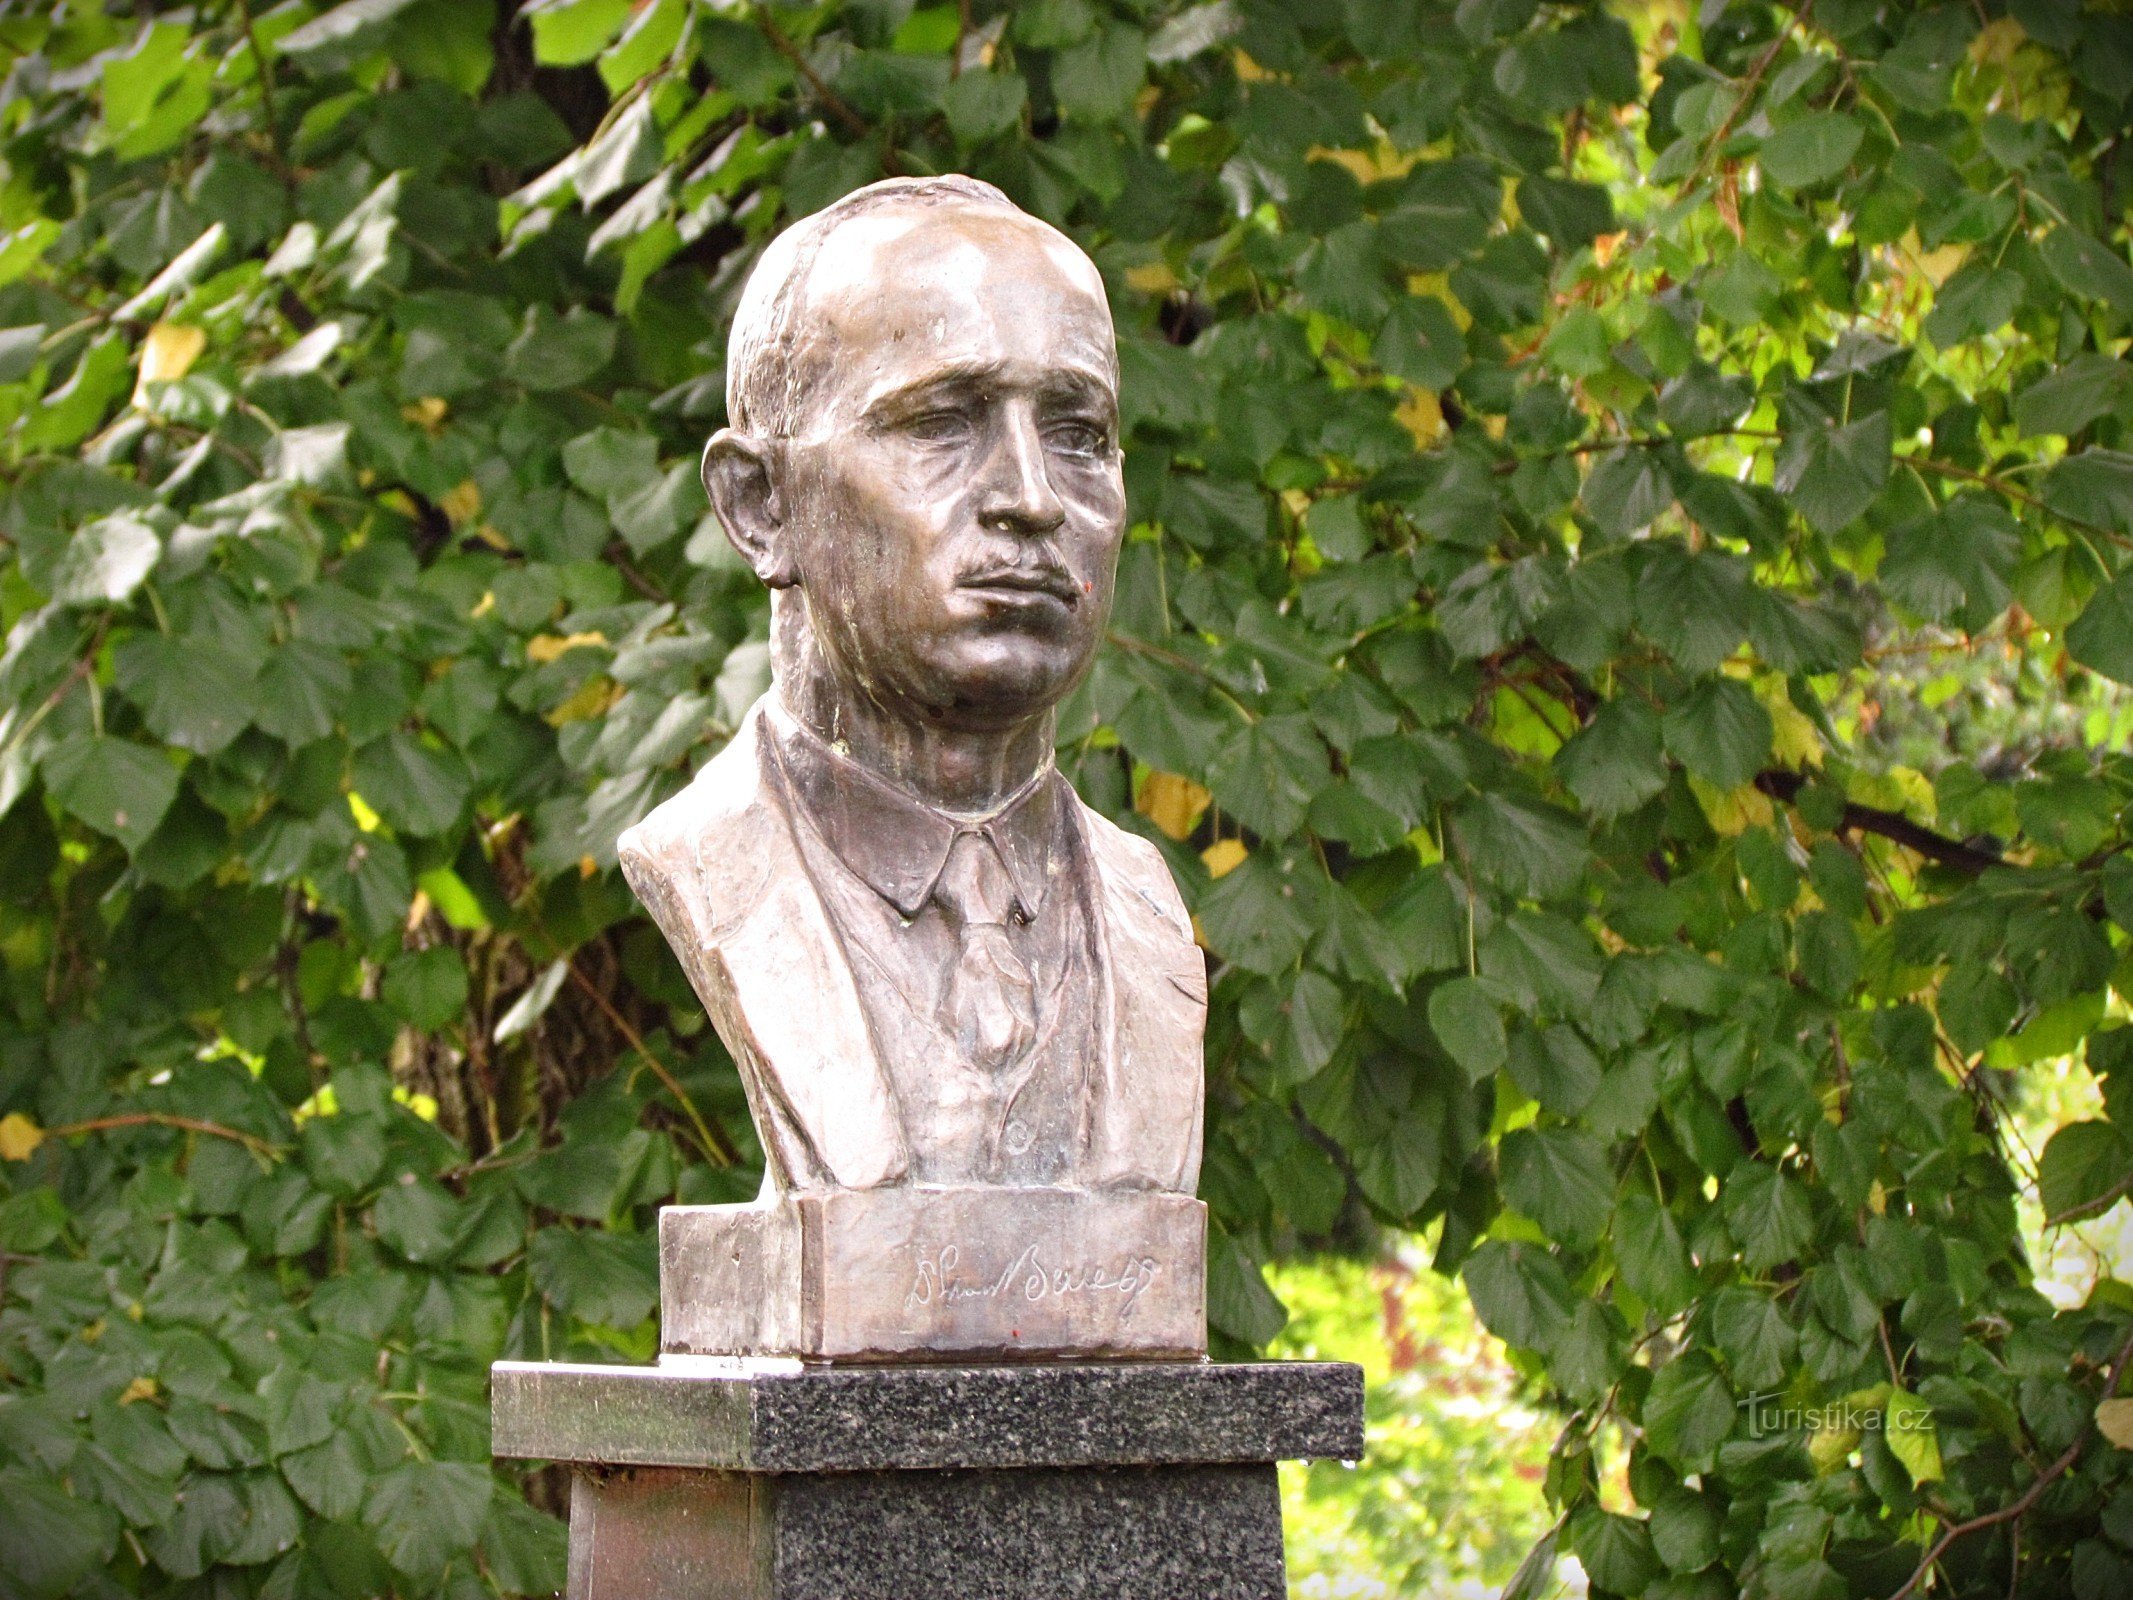 E. Beneš monument